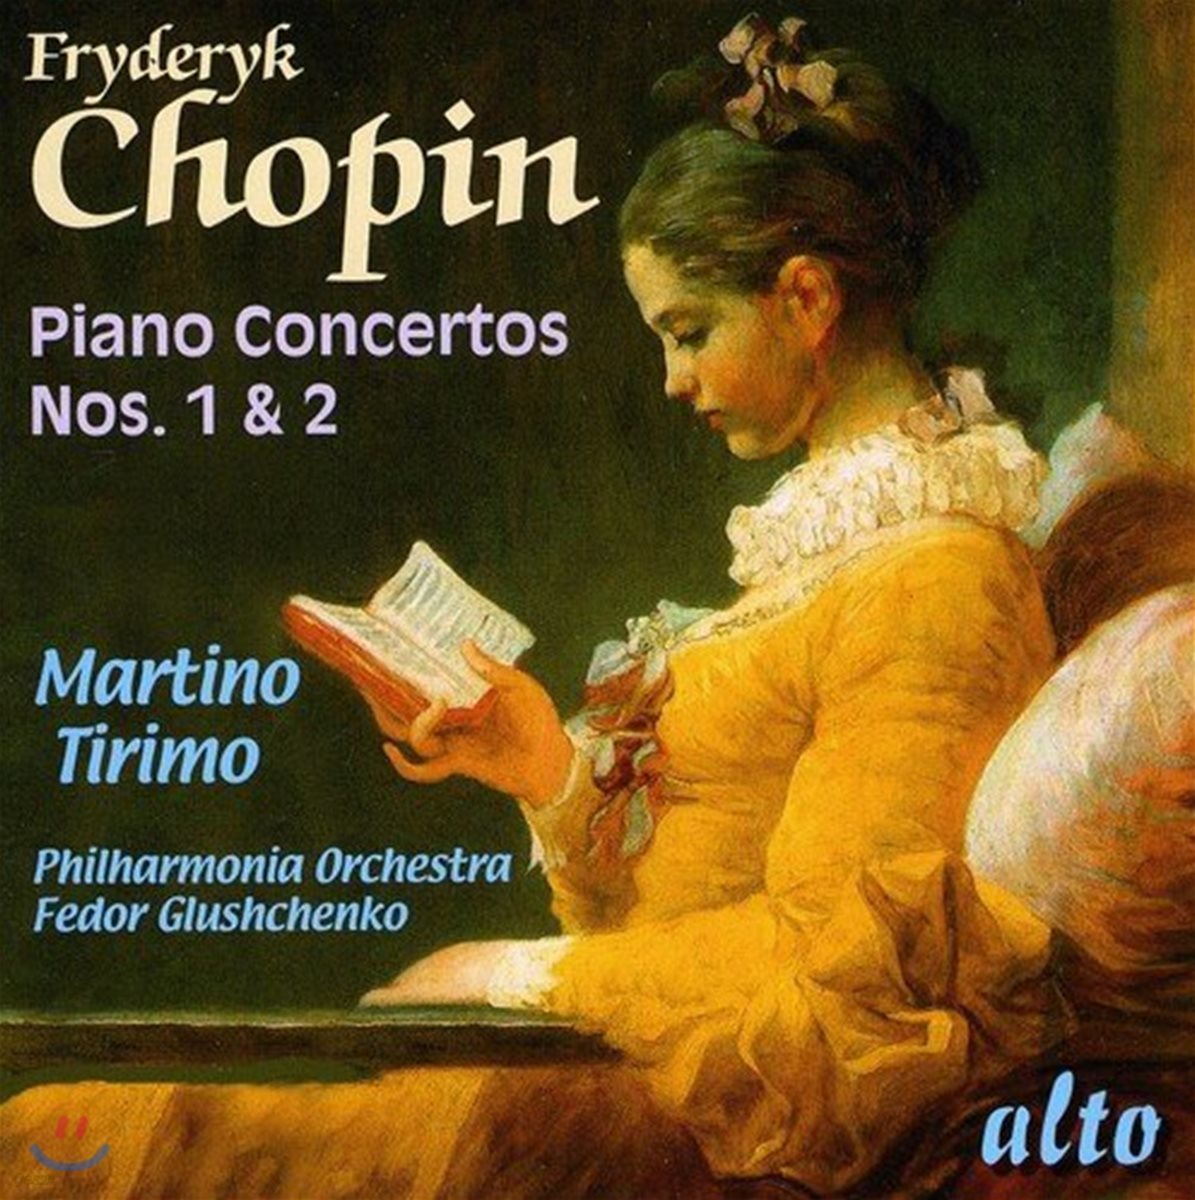 Martino Tirimo 쇼팽: 피아노 협주곡 1 & 2번 (Chopin: Piano Concertos Op.11 & Op.21)